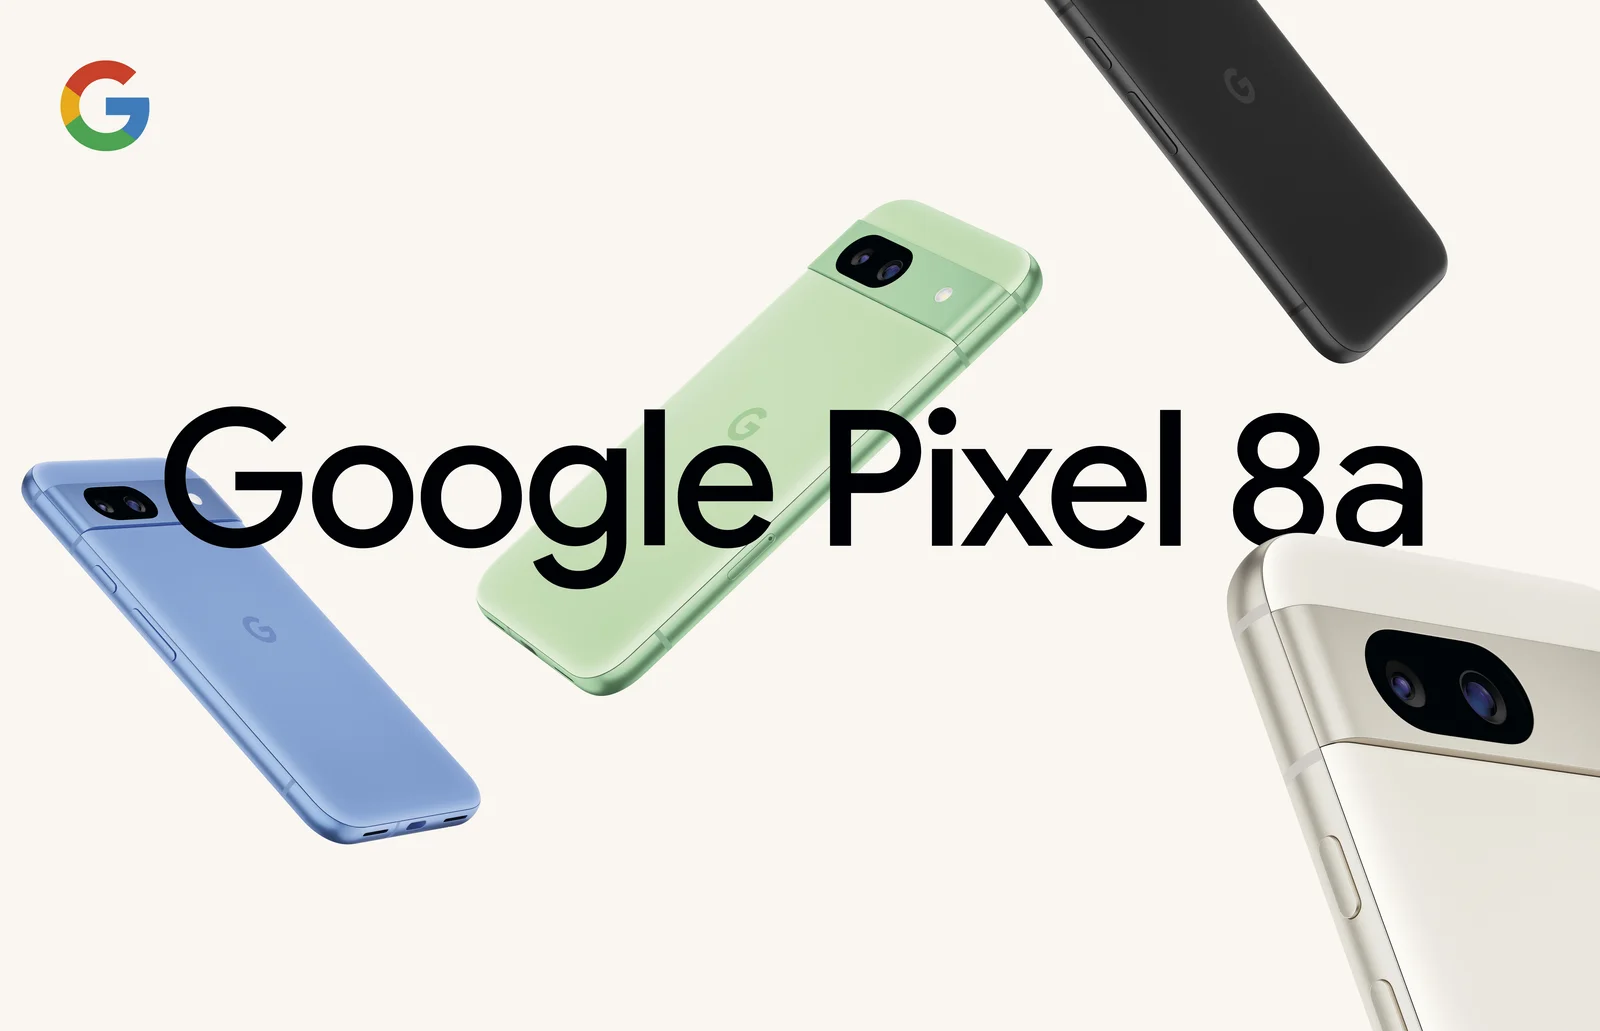 Google unveils Pixel 8a with “premium” AI features Check out specs